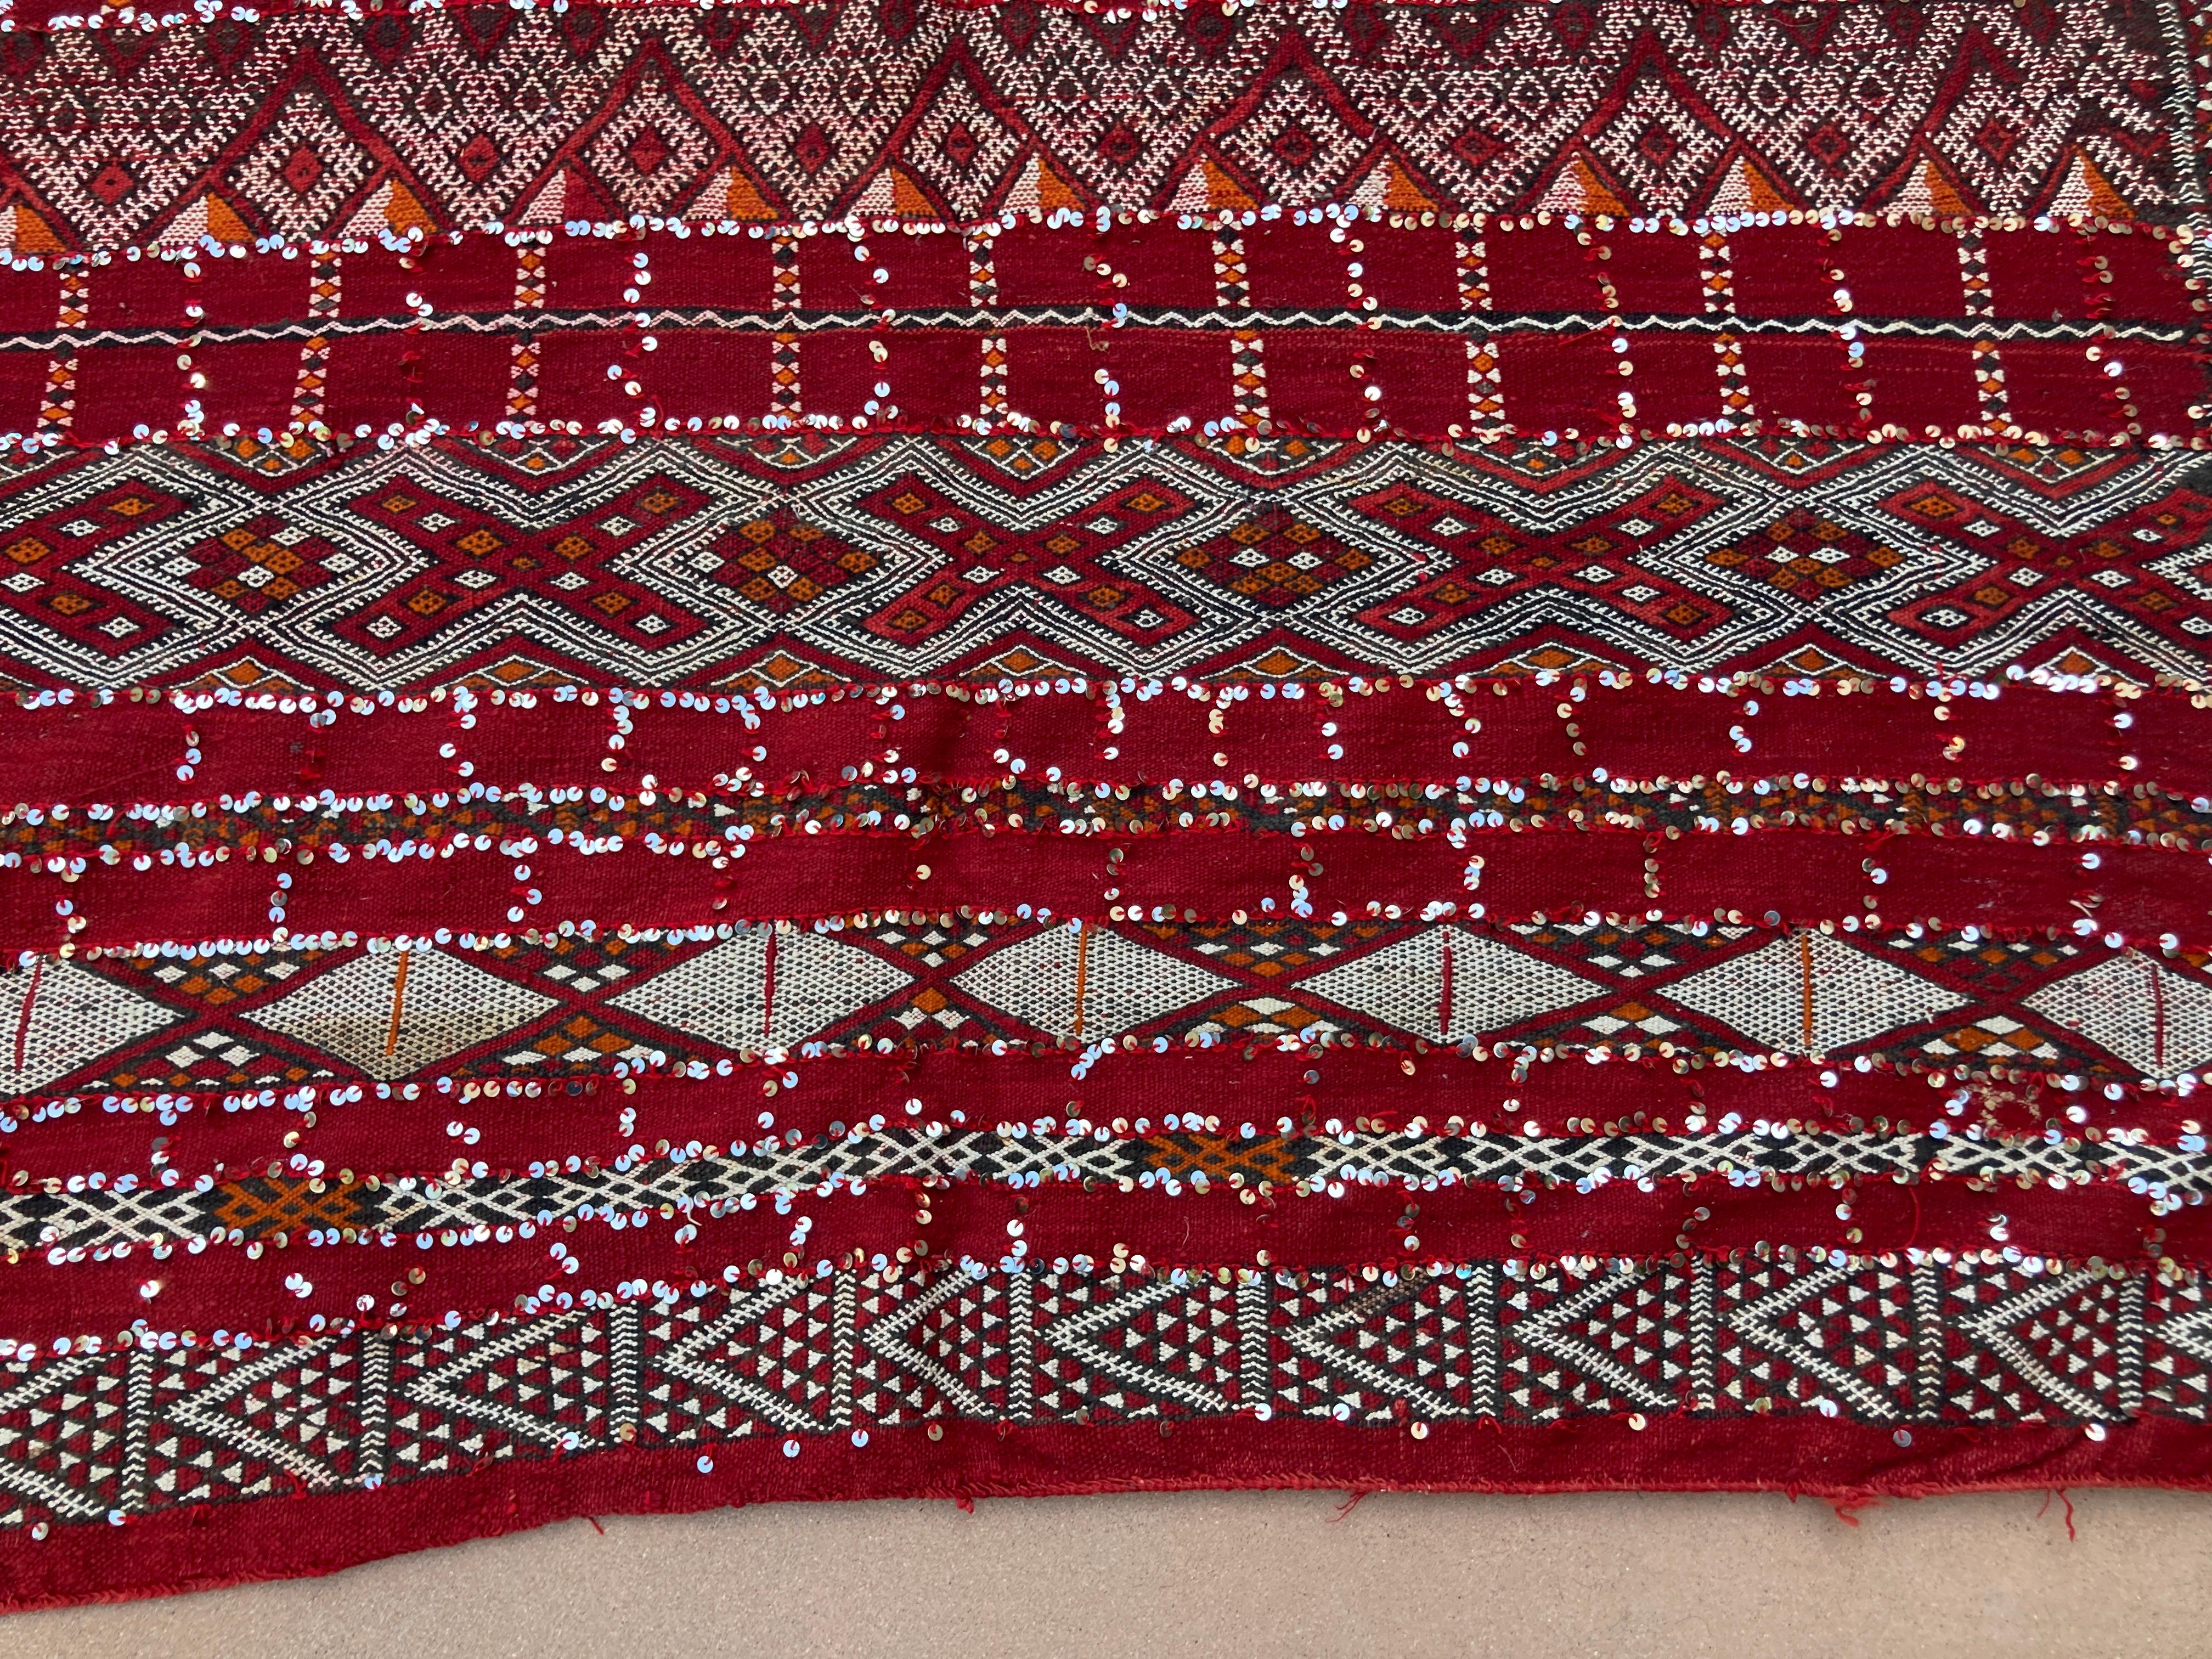 Wool Moroccan Vintage Ethnic Textile with Sequins North Africa, Handira